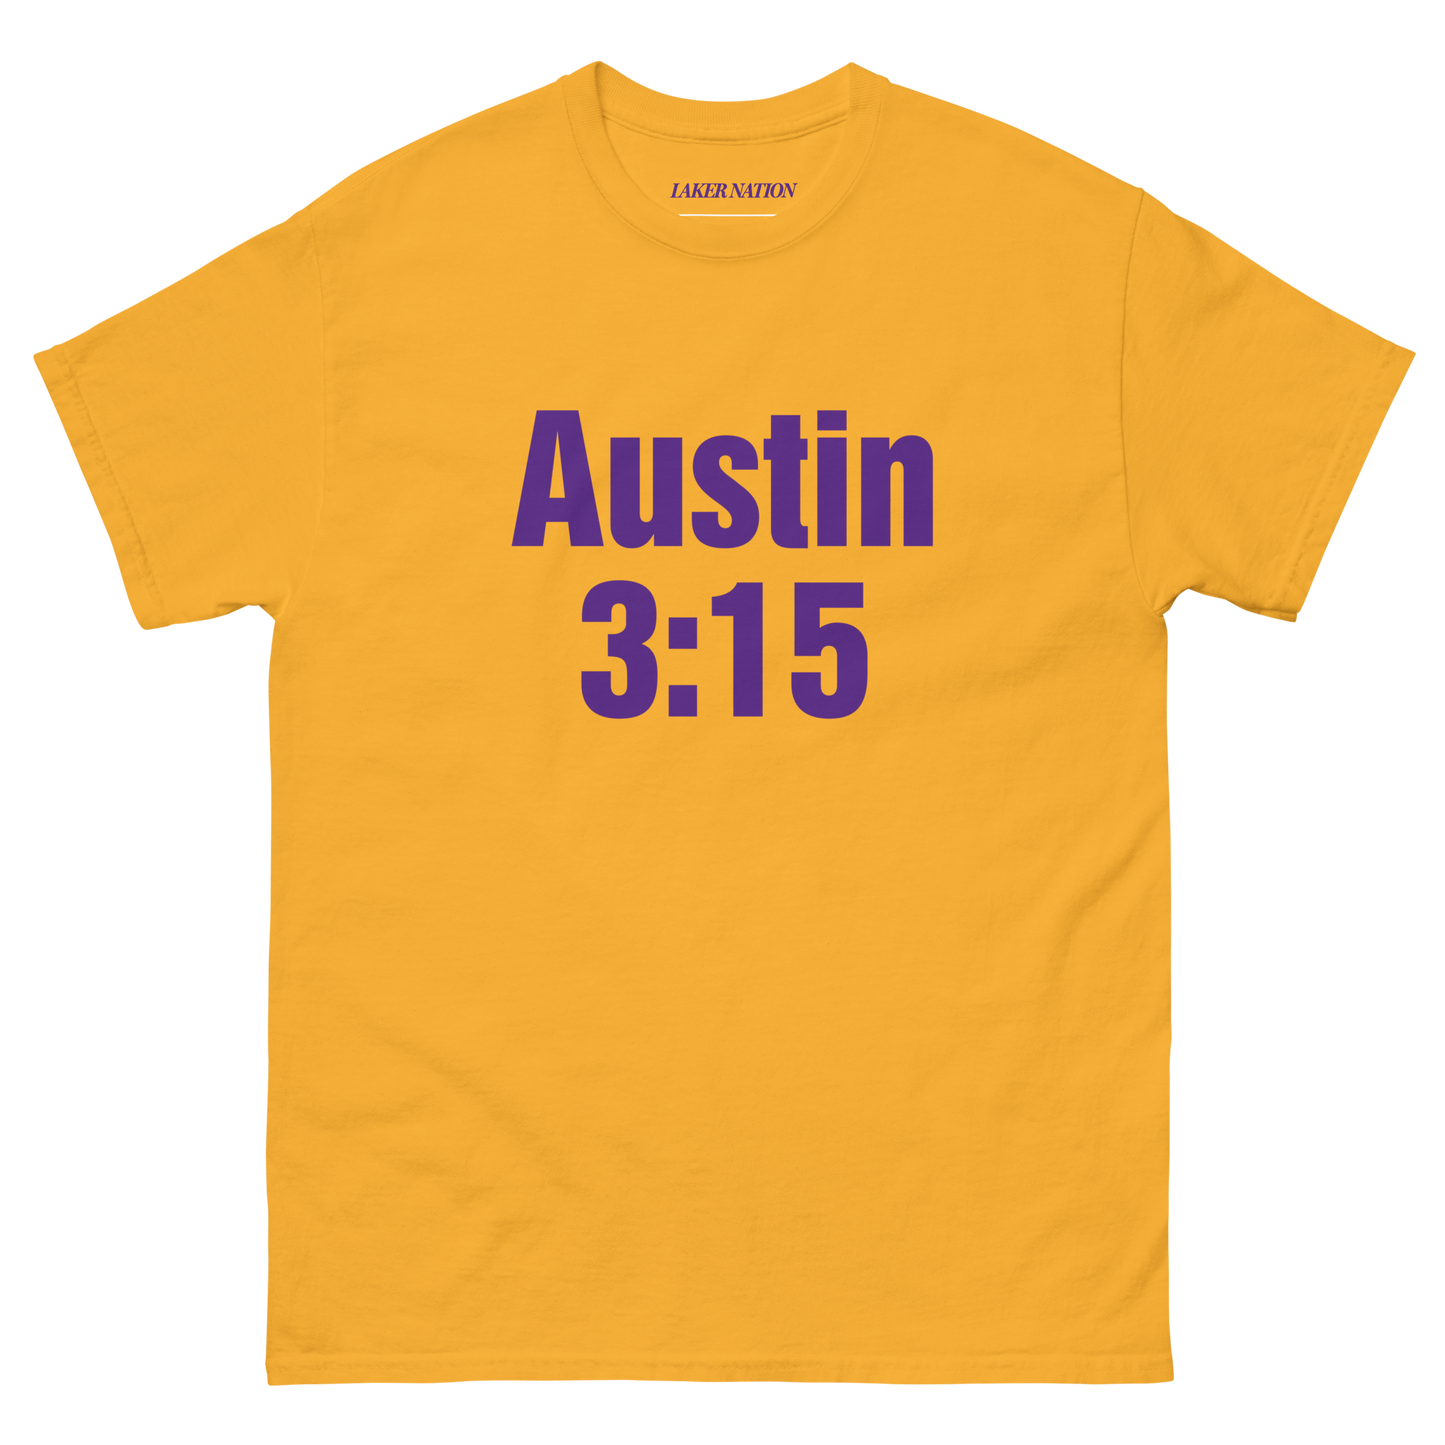 Austin 3:15